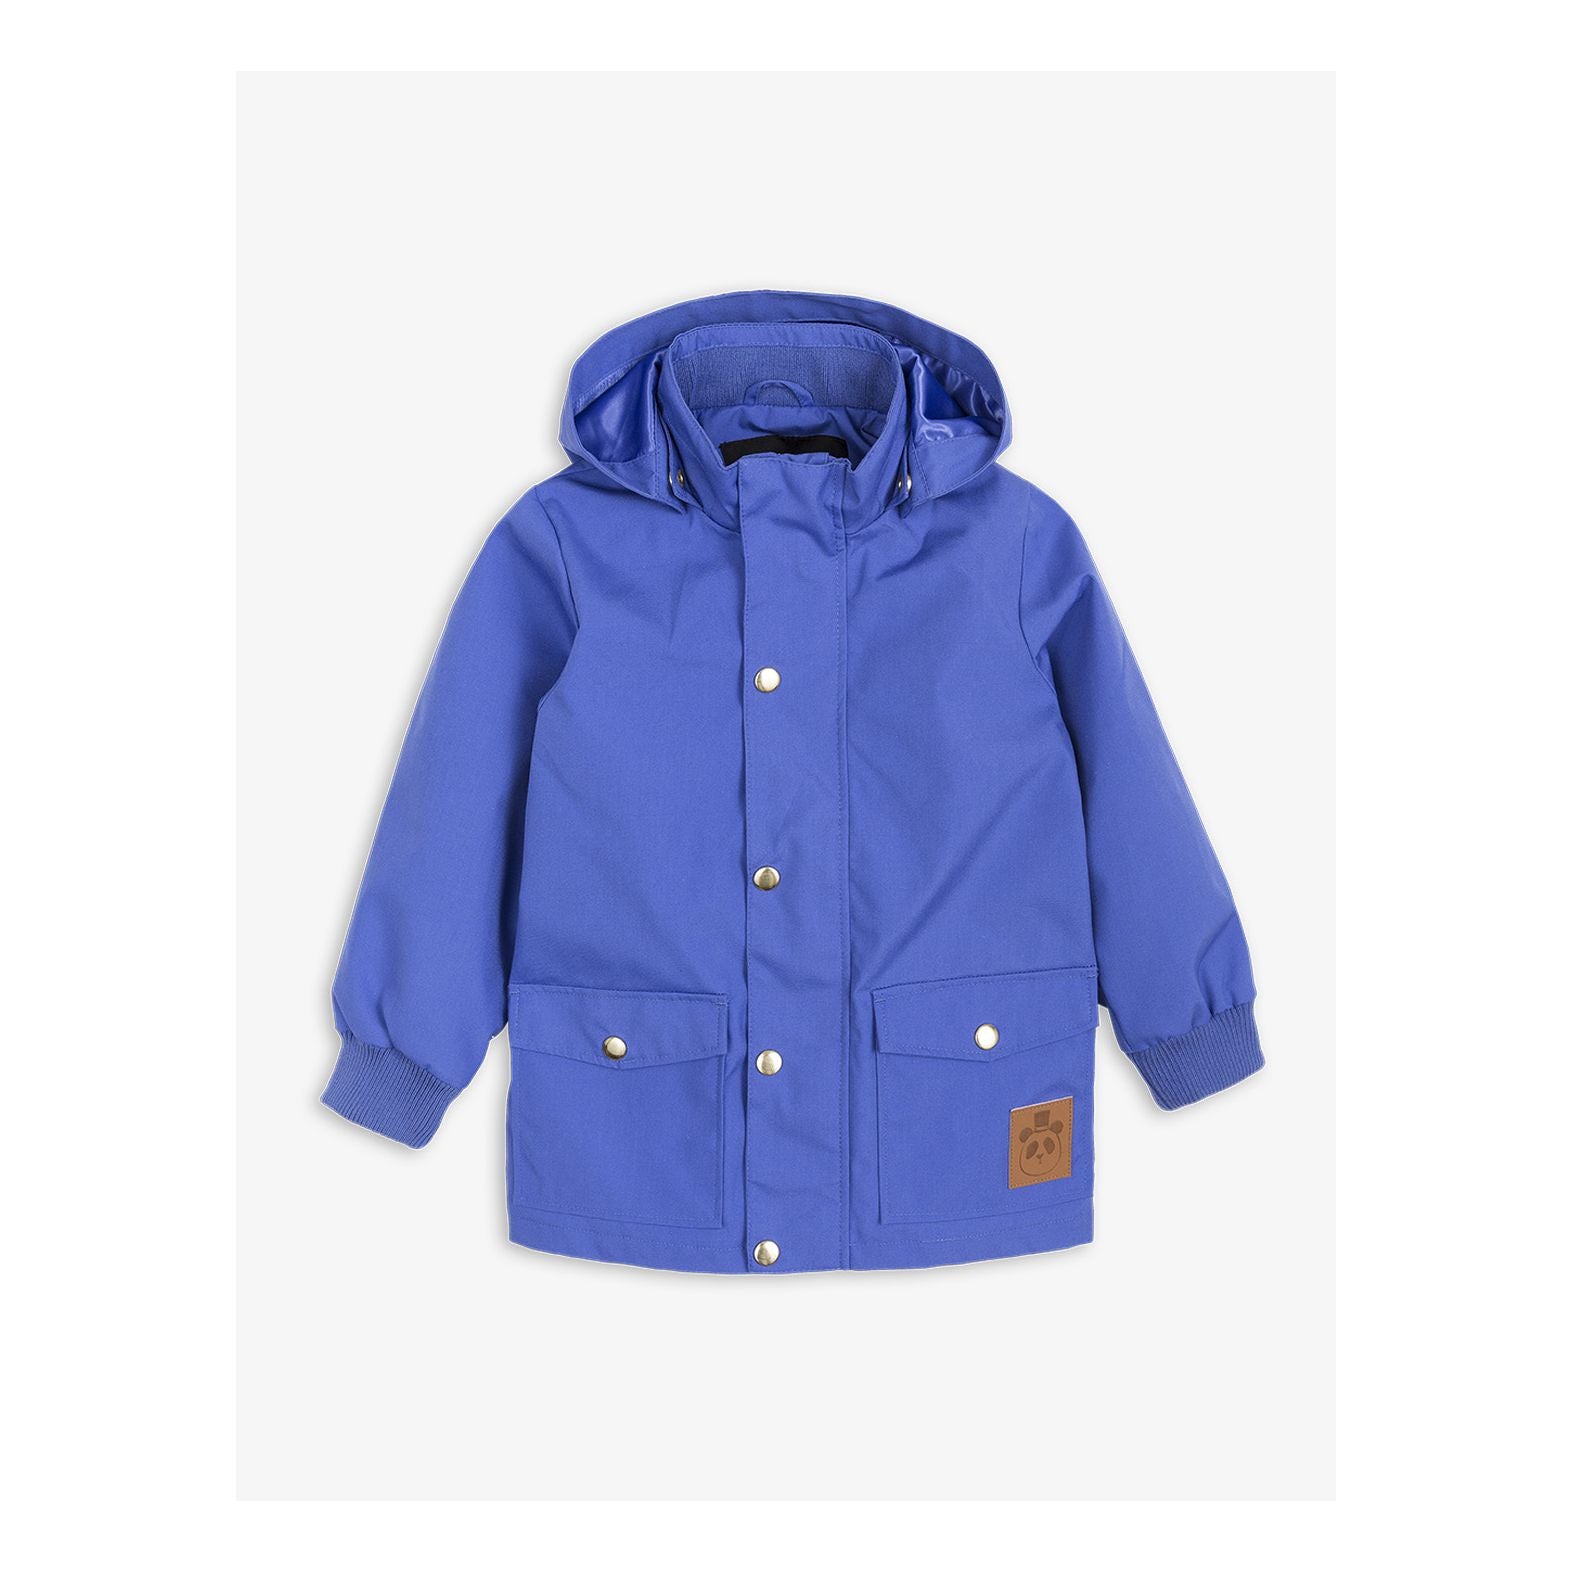 Boys Blue Pico jacket